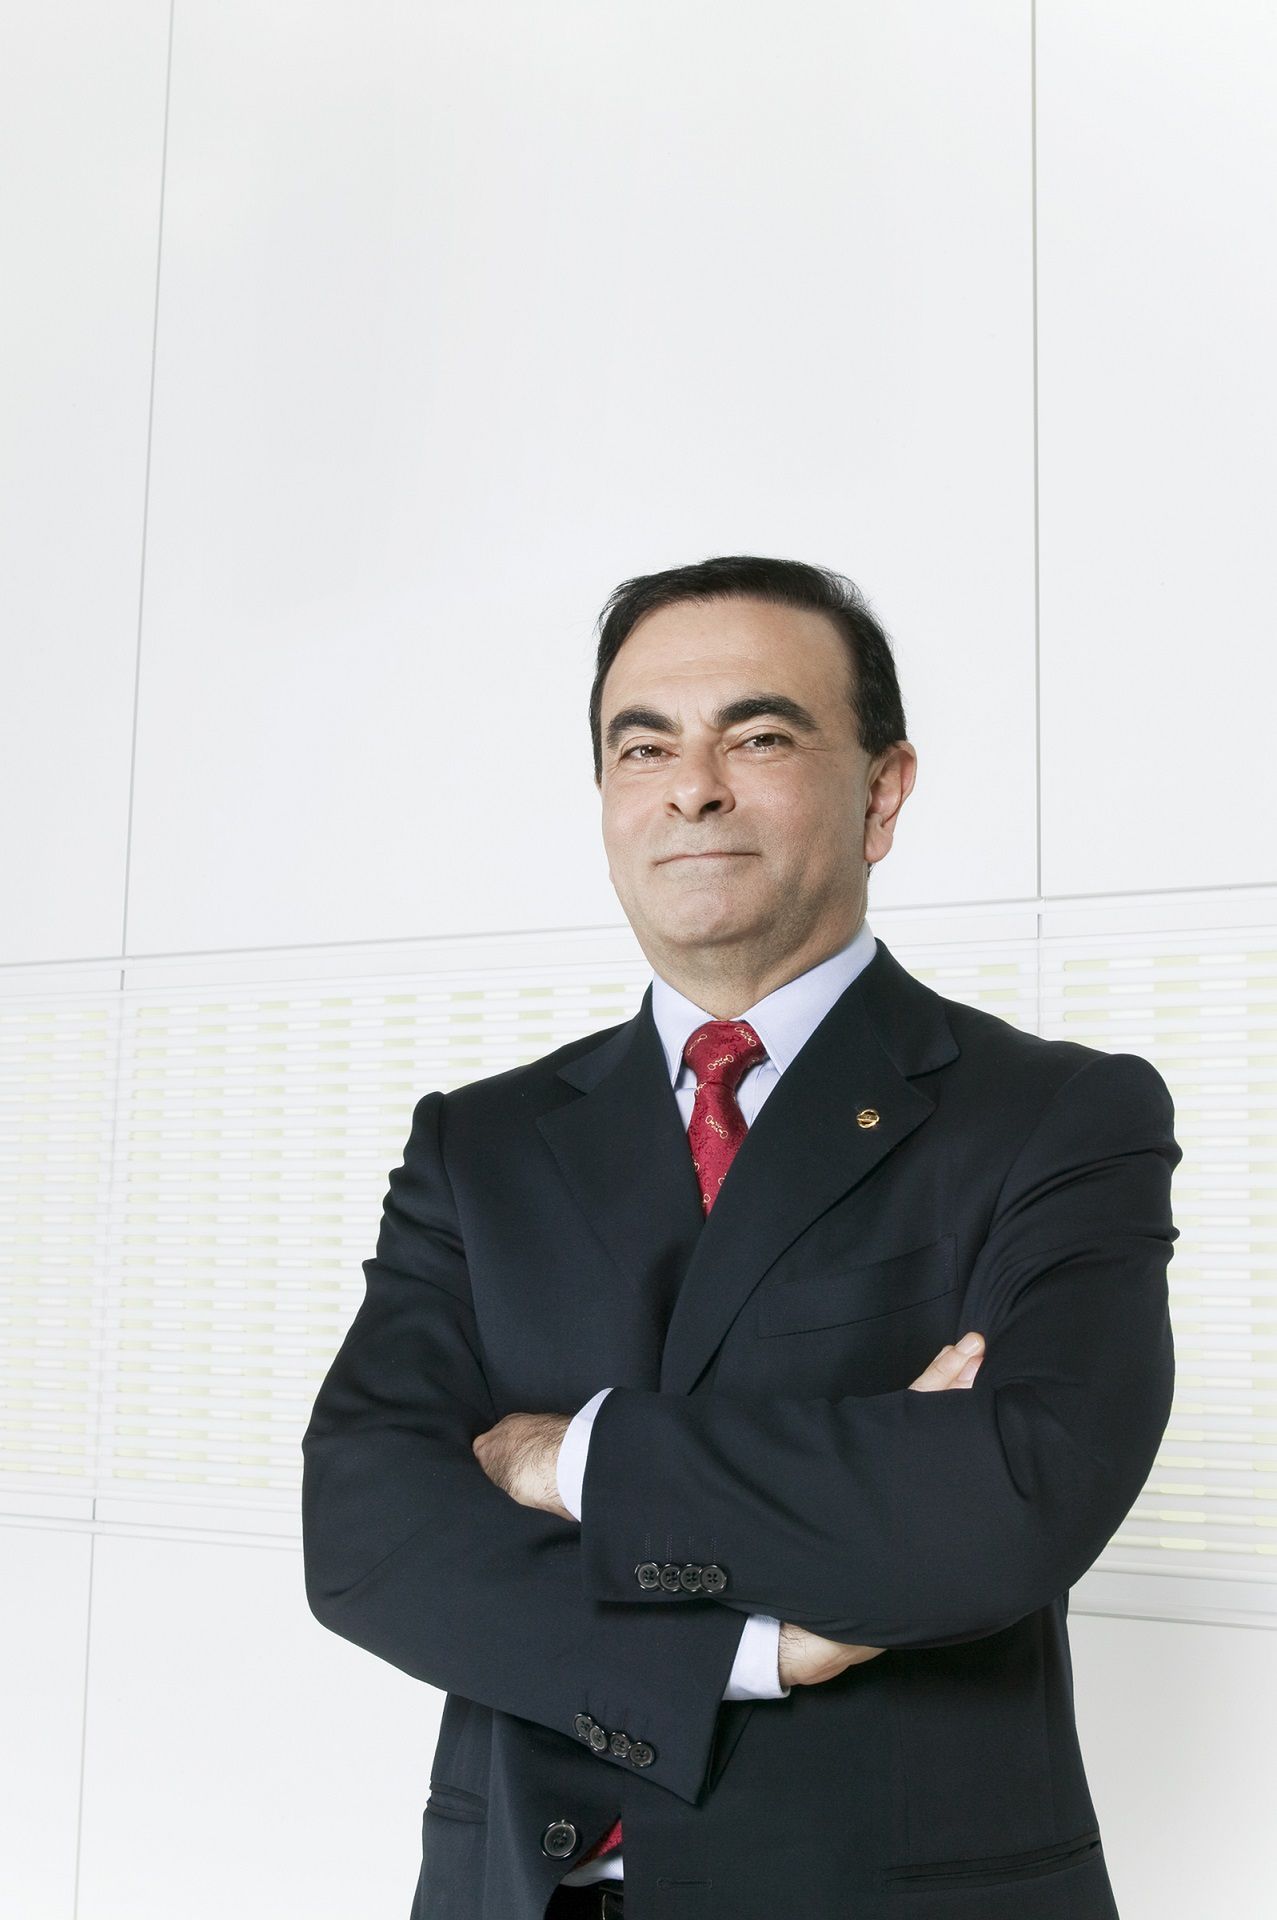 Carlos Ghosn (fot. Nissan)